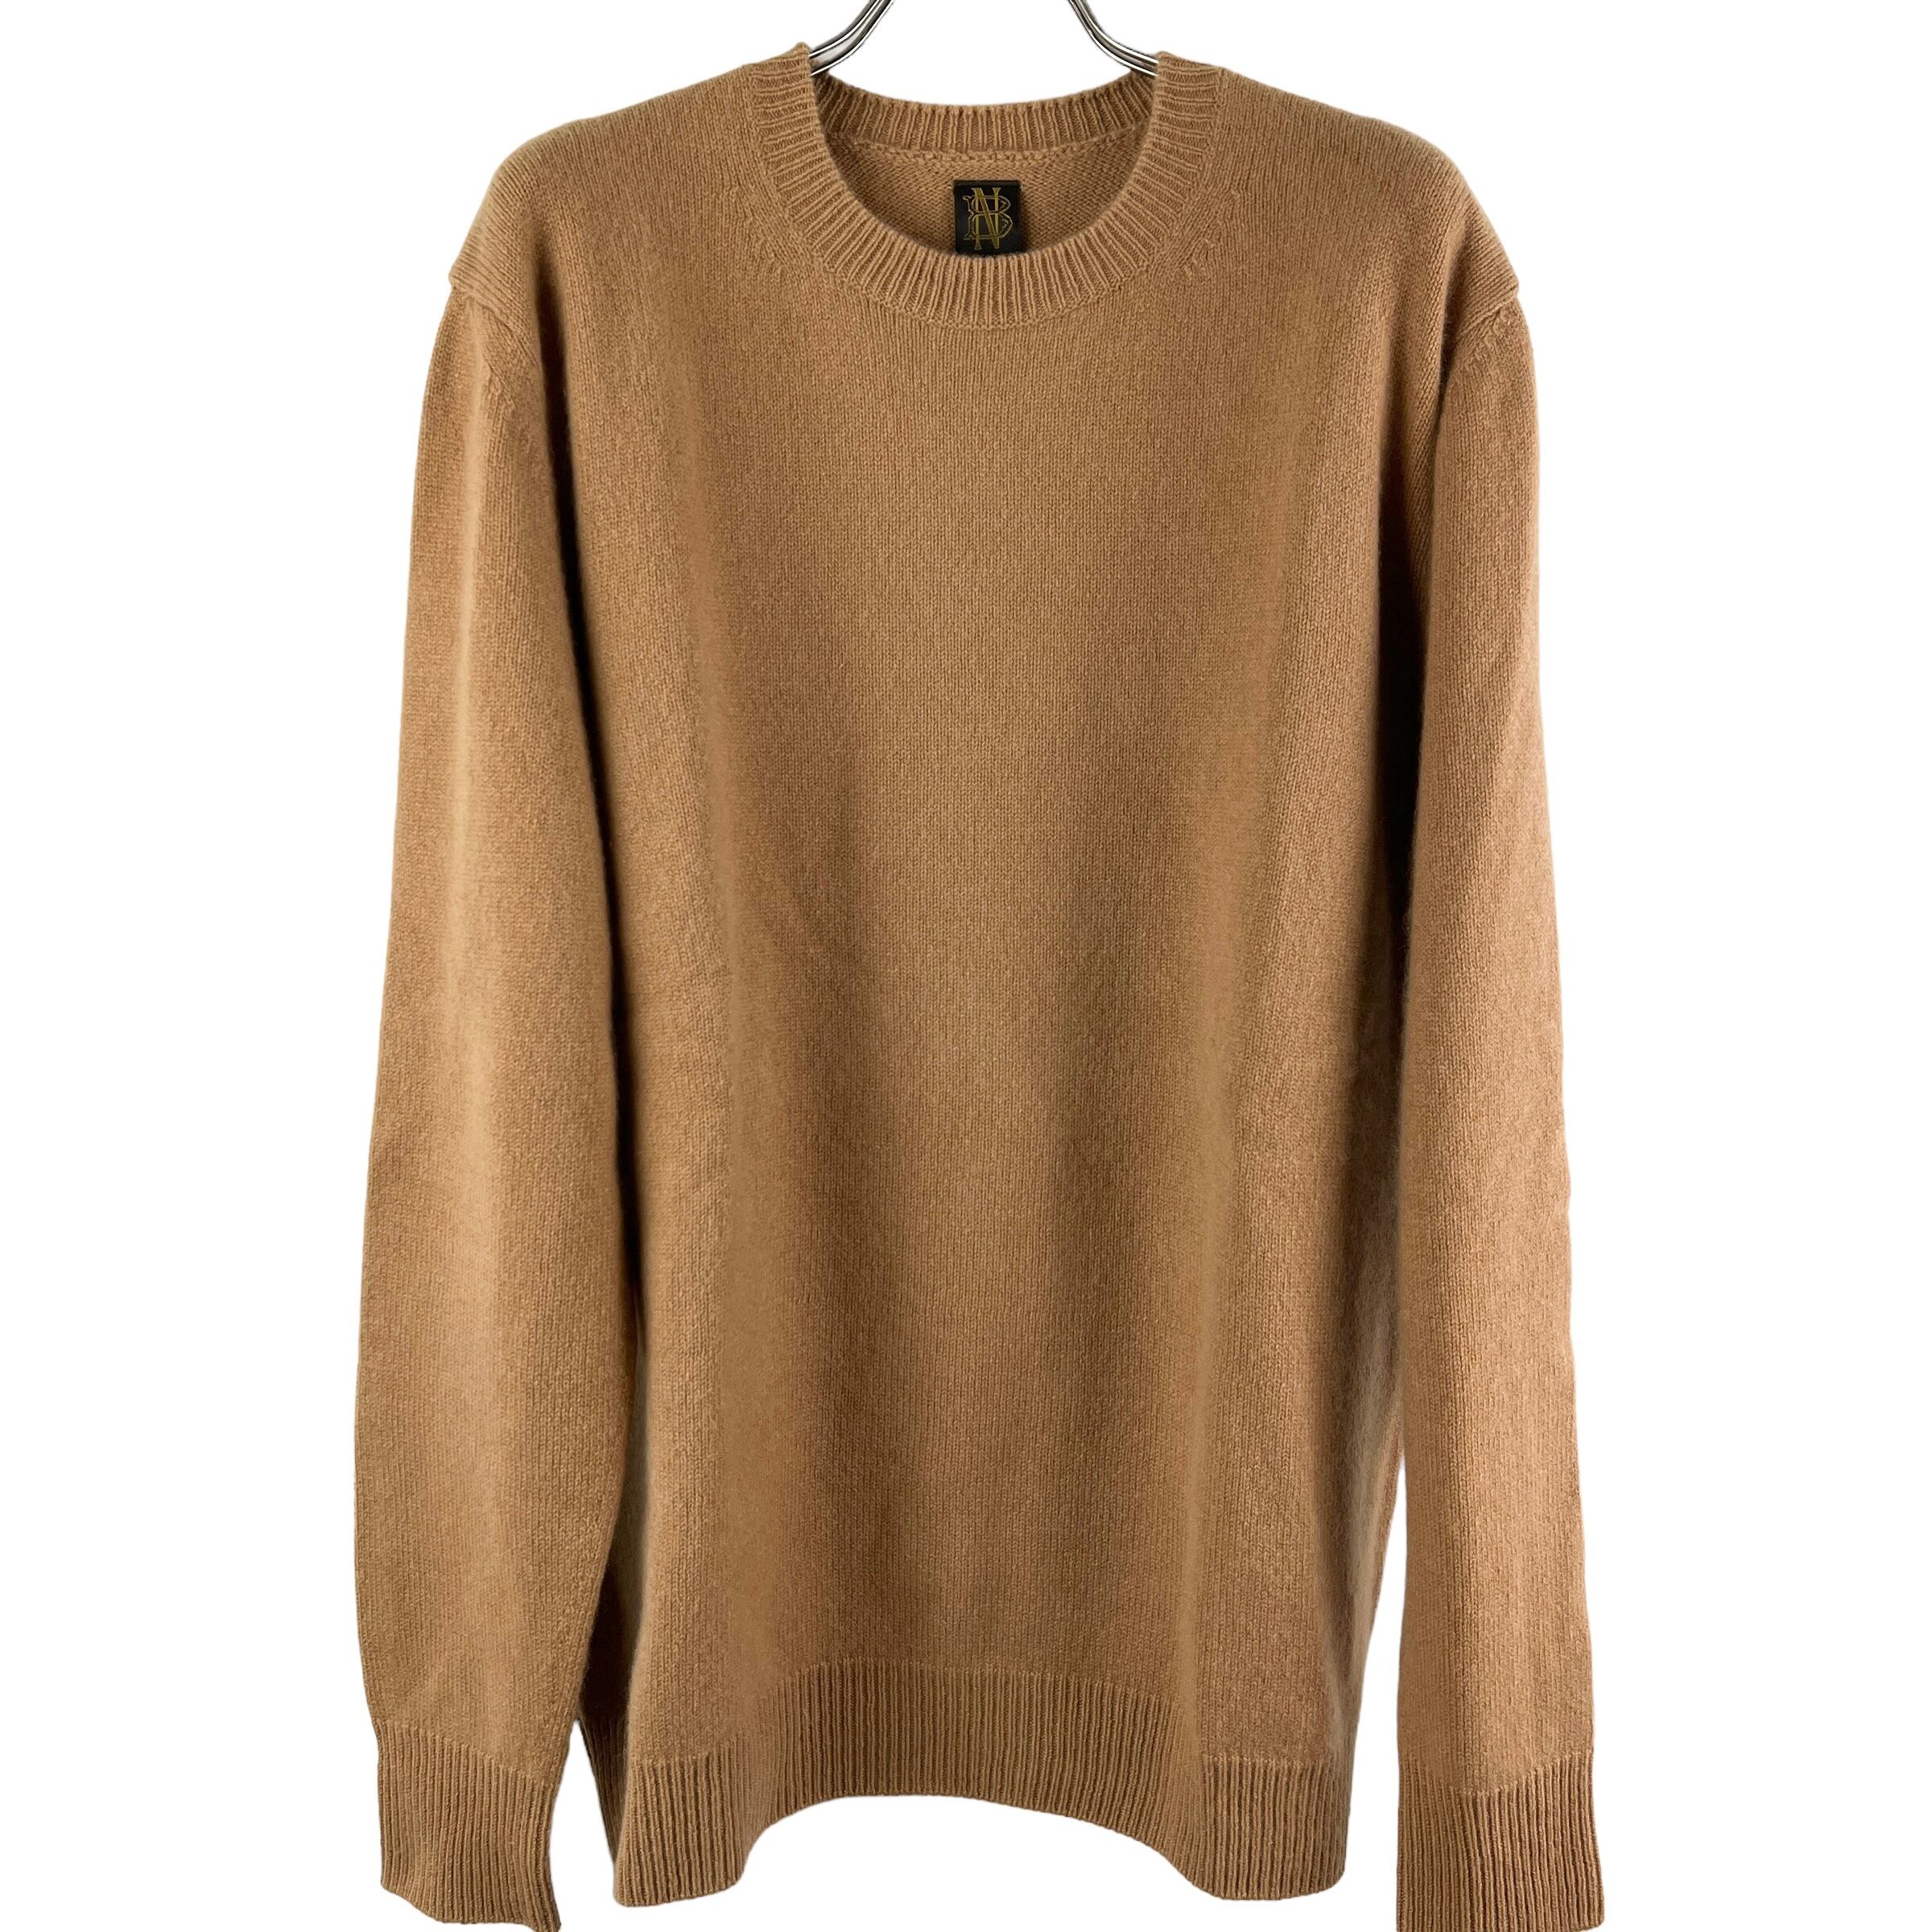 BATONER(バトナー) Casual Cashmere Longsleeve Knit T Shirt (brown)